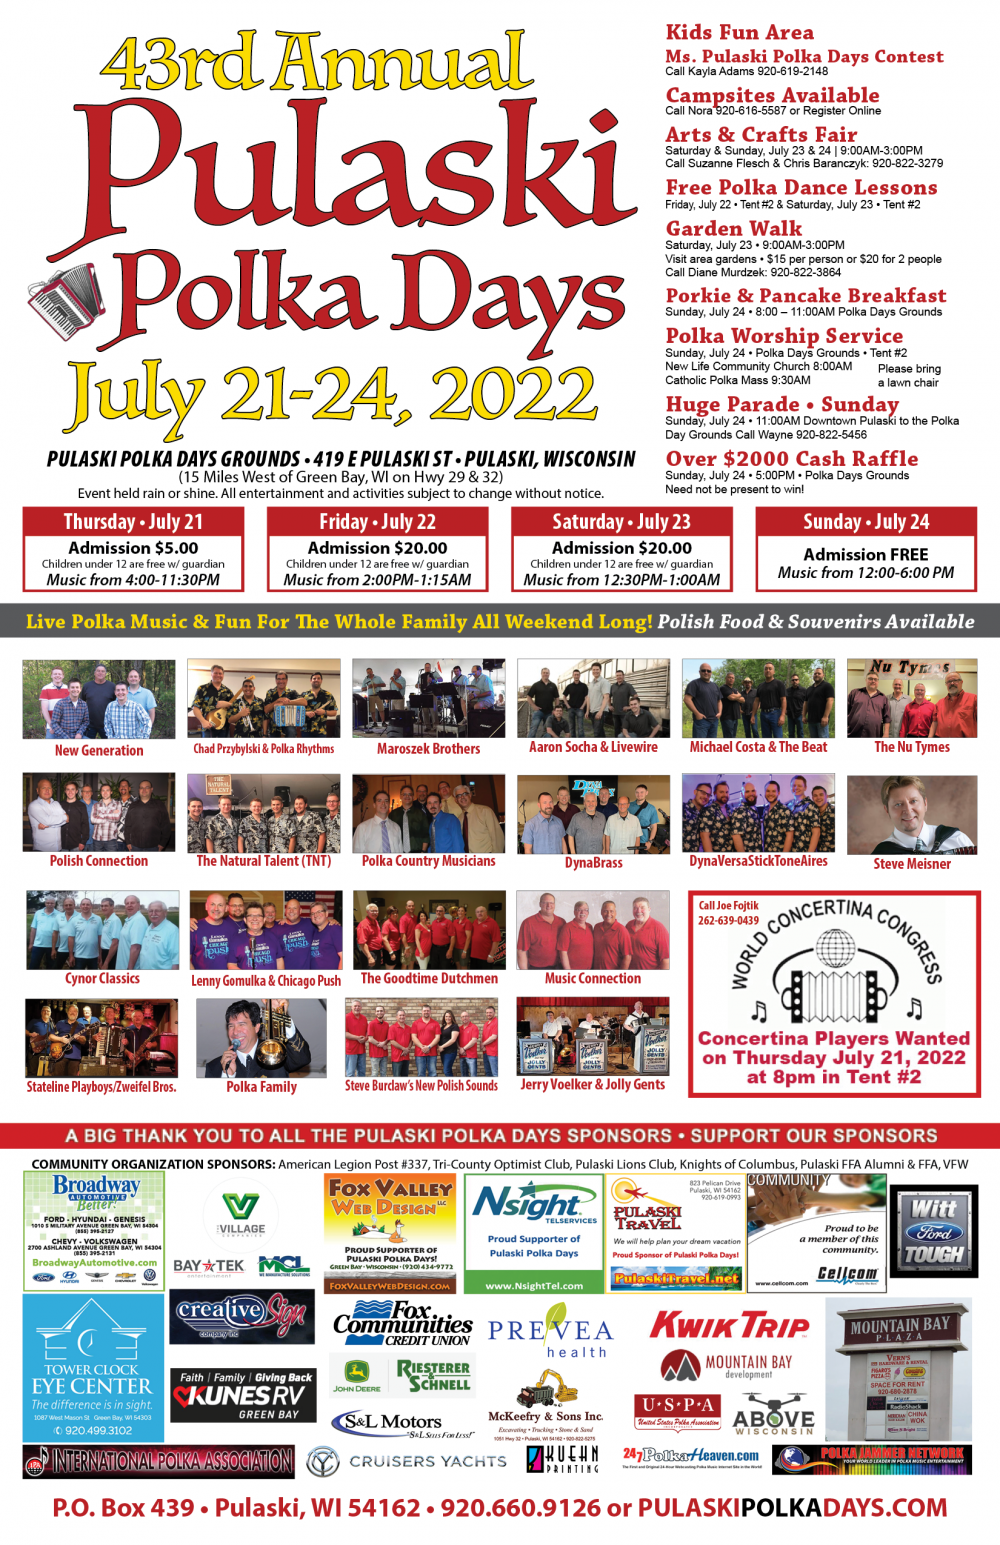 Pulaski Polka Days in Pulaski, July 2124, 2022 State Trunk Tour